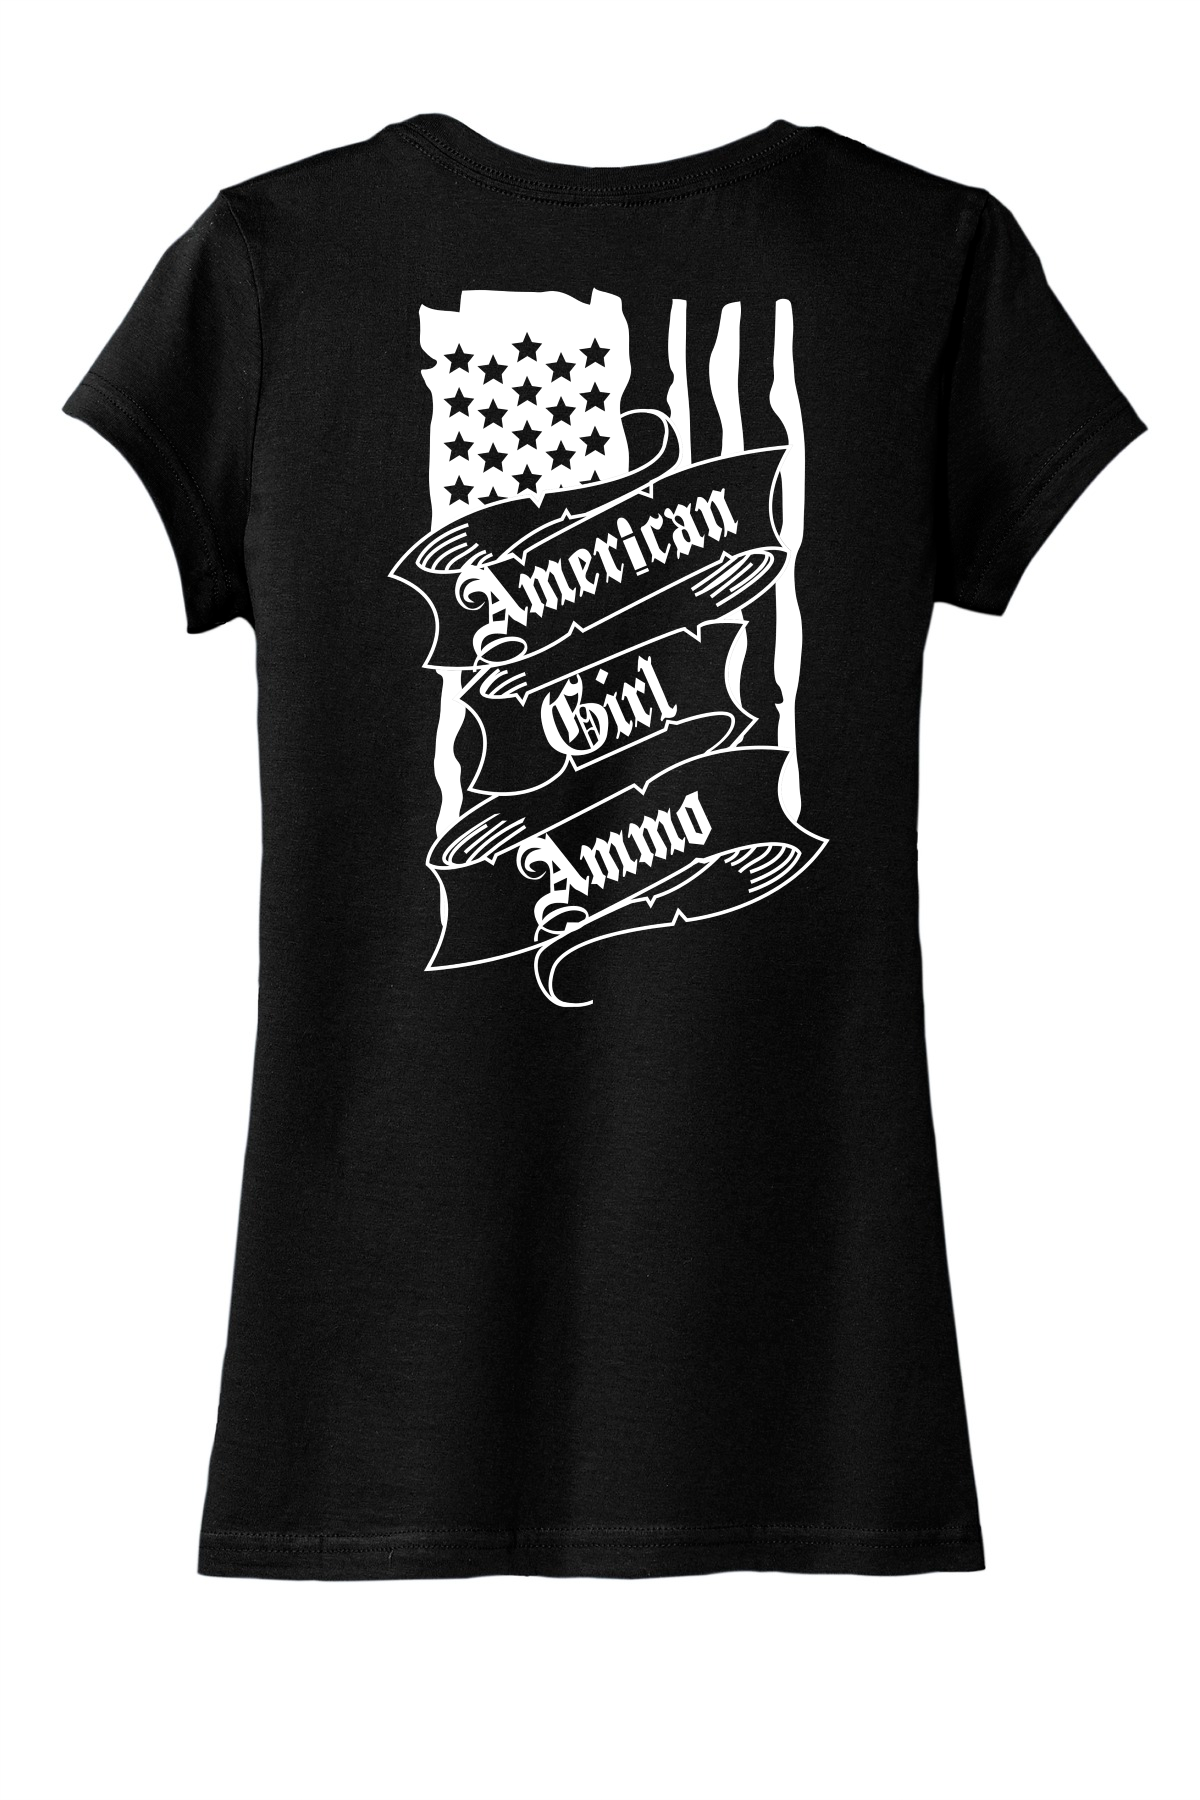 Guitar- Women's T-Shirt